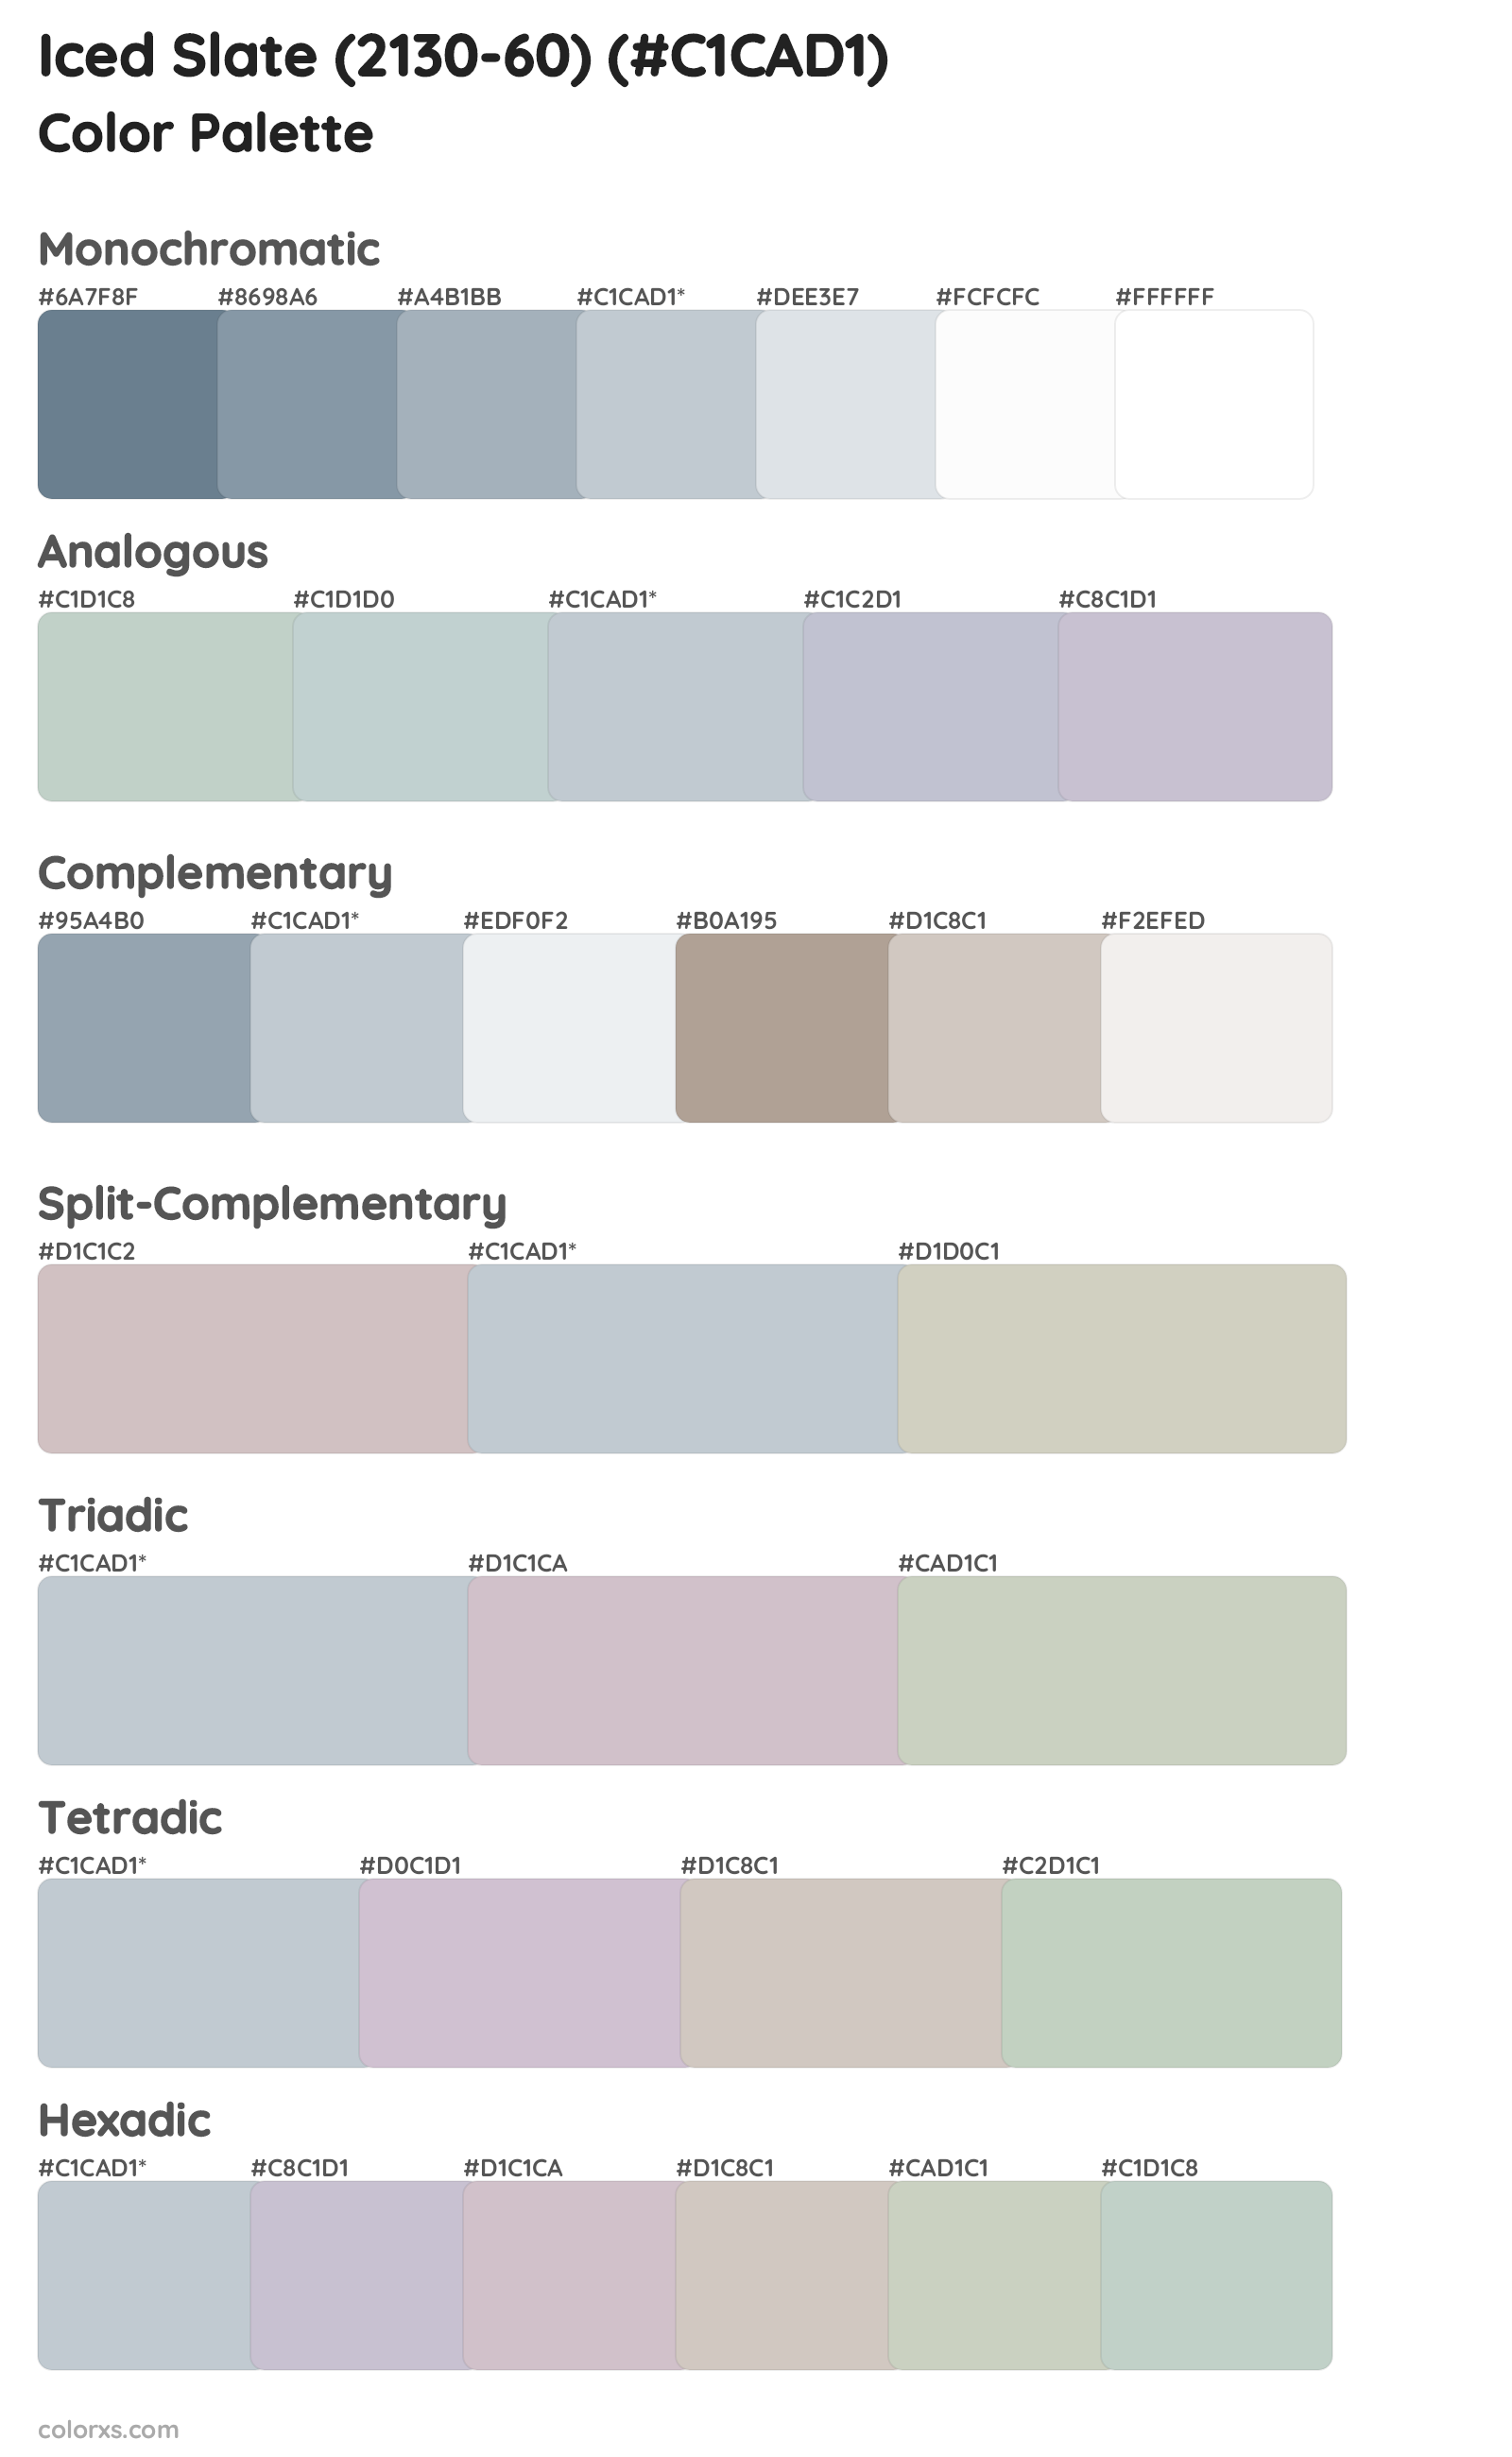 Iced Slate (2130-60) Color Scheme Palettes